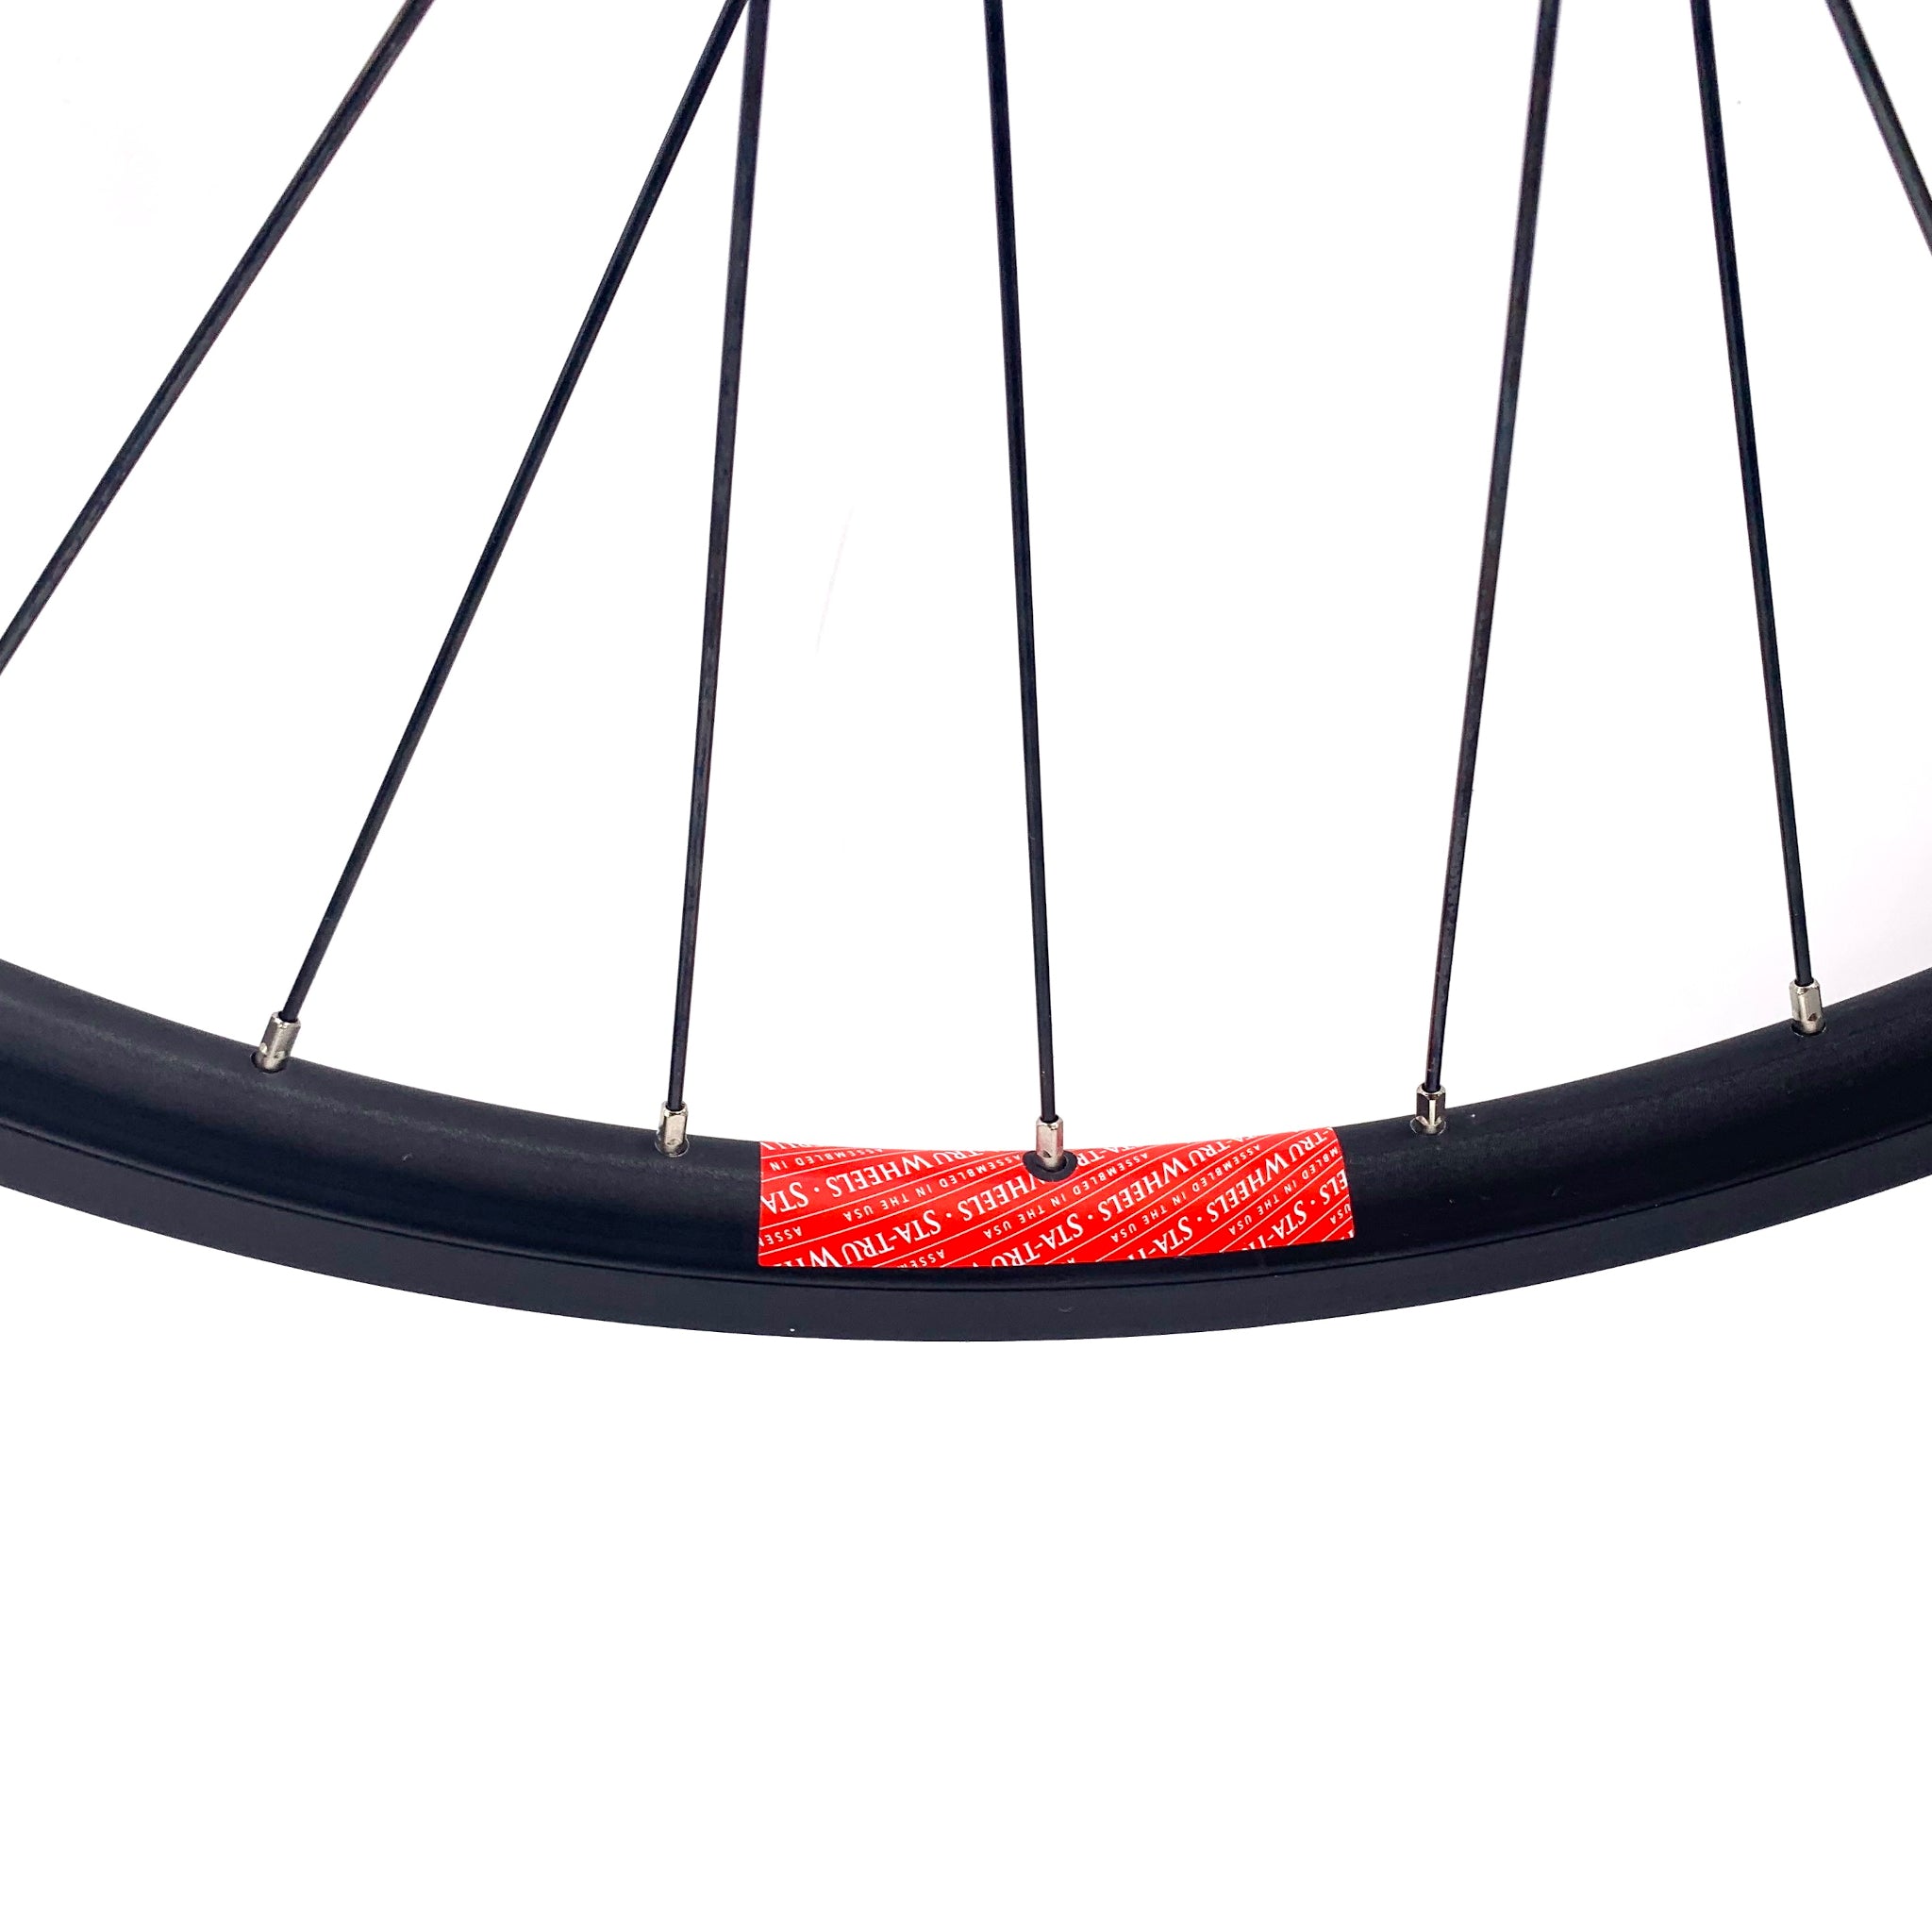 Sta-Tru 26-inch BLACK Doublewall Rear Wheel with Shimano Center-Lock Disc Hub - The Bikesmiths